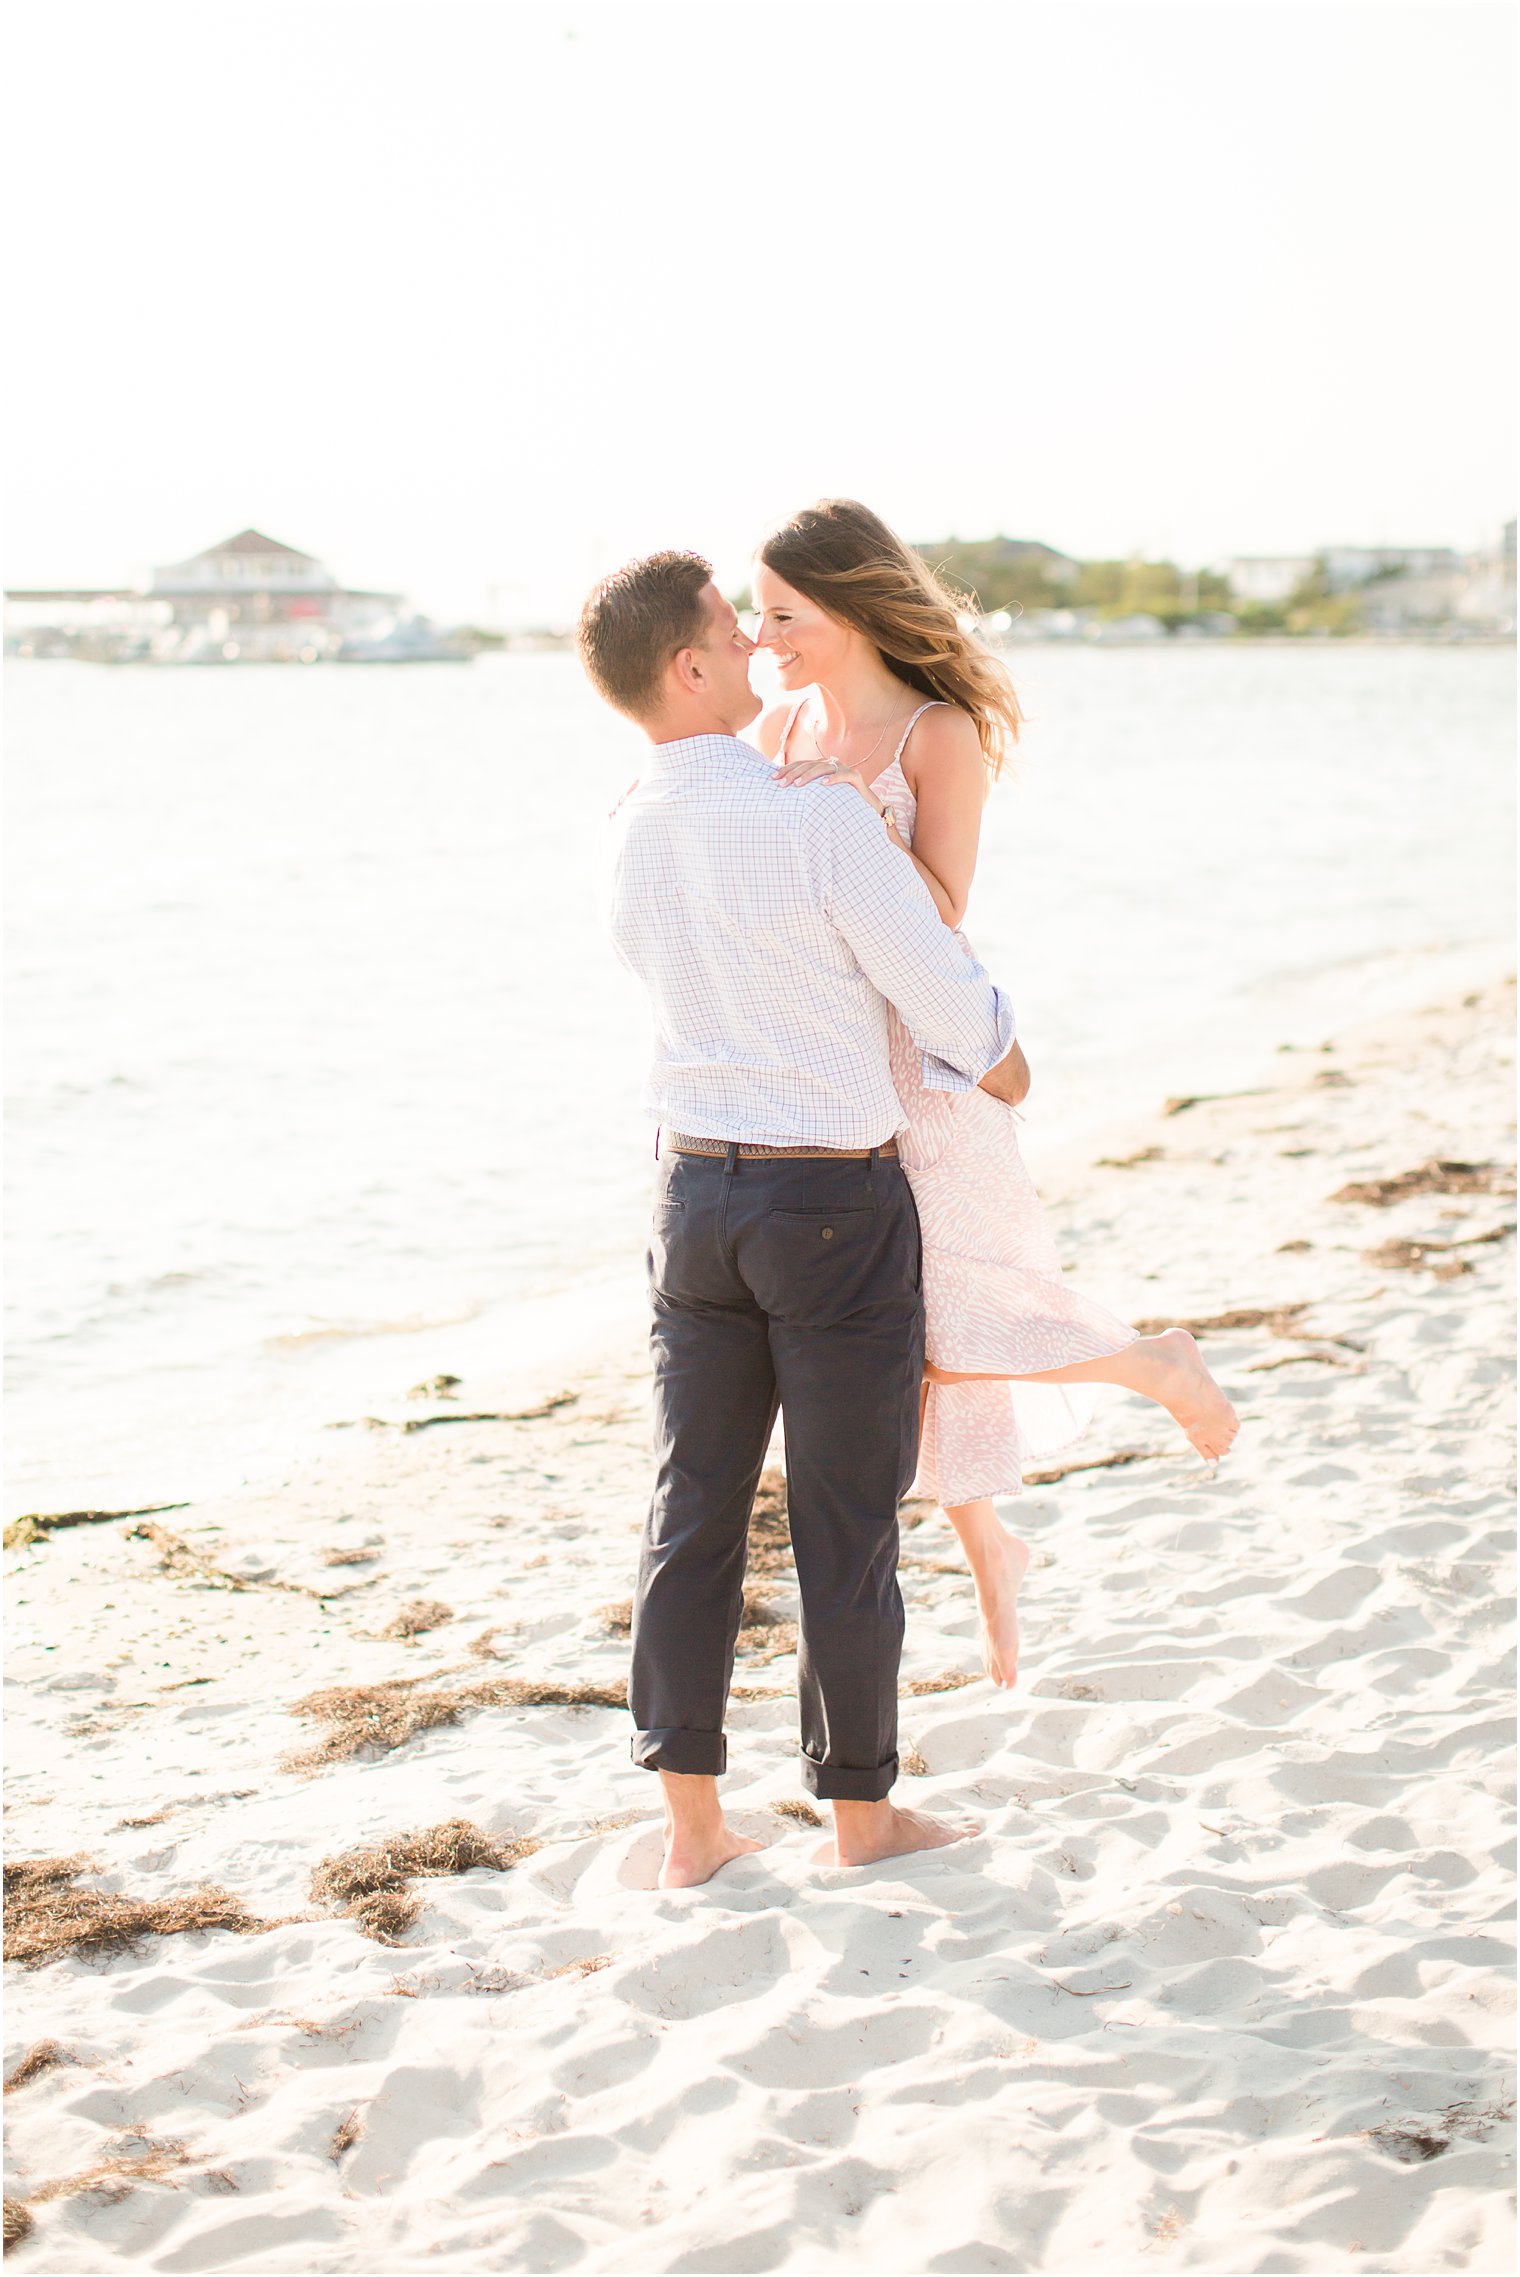 Idalia Photography photographs romantic beach engagement session